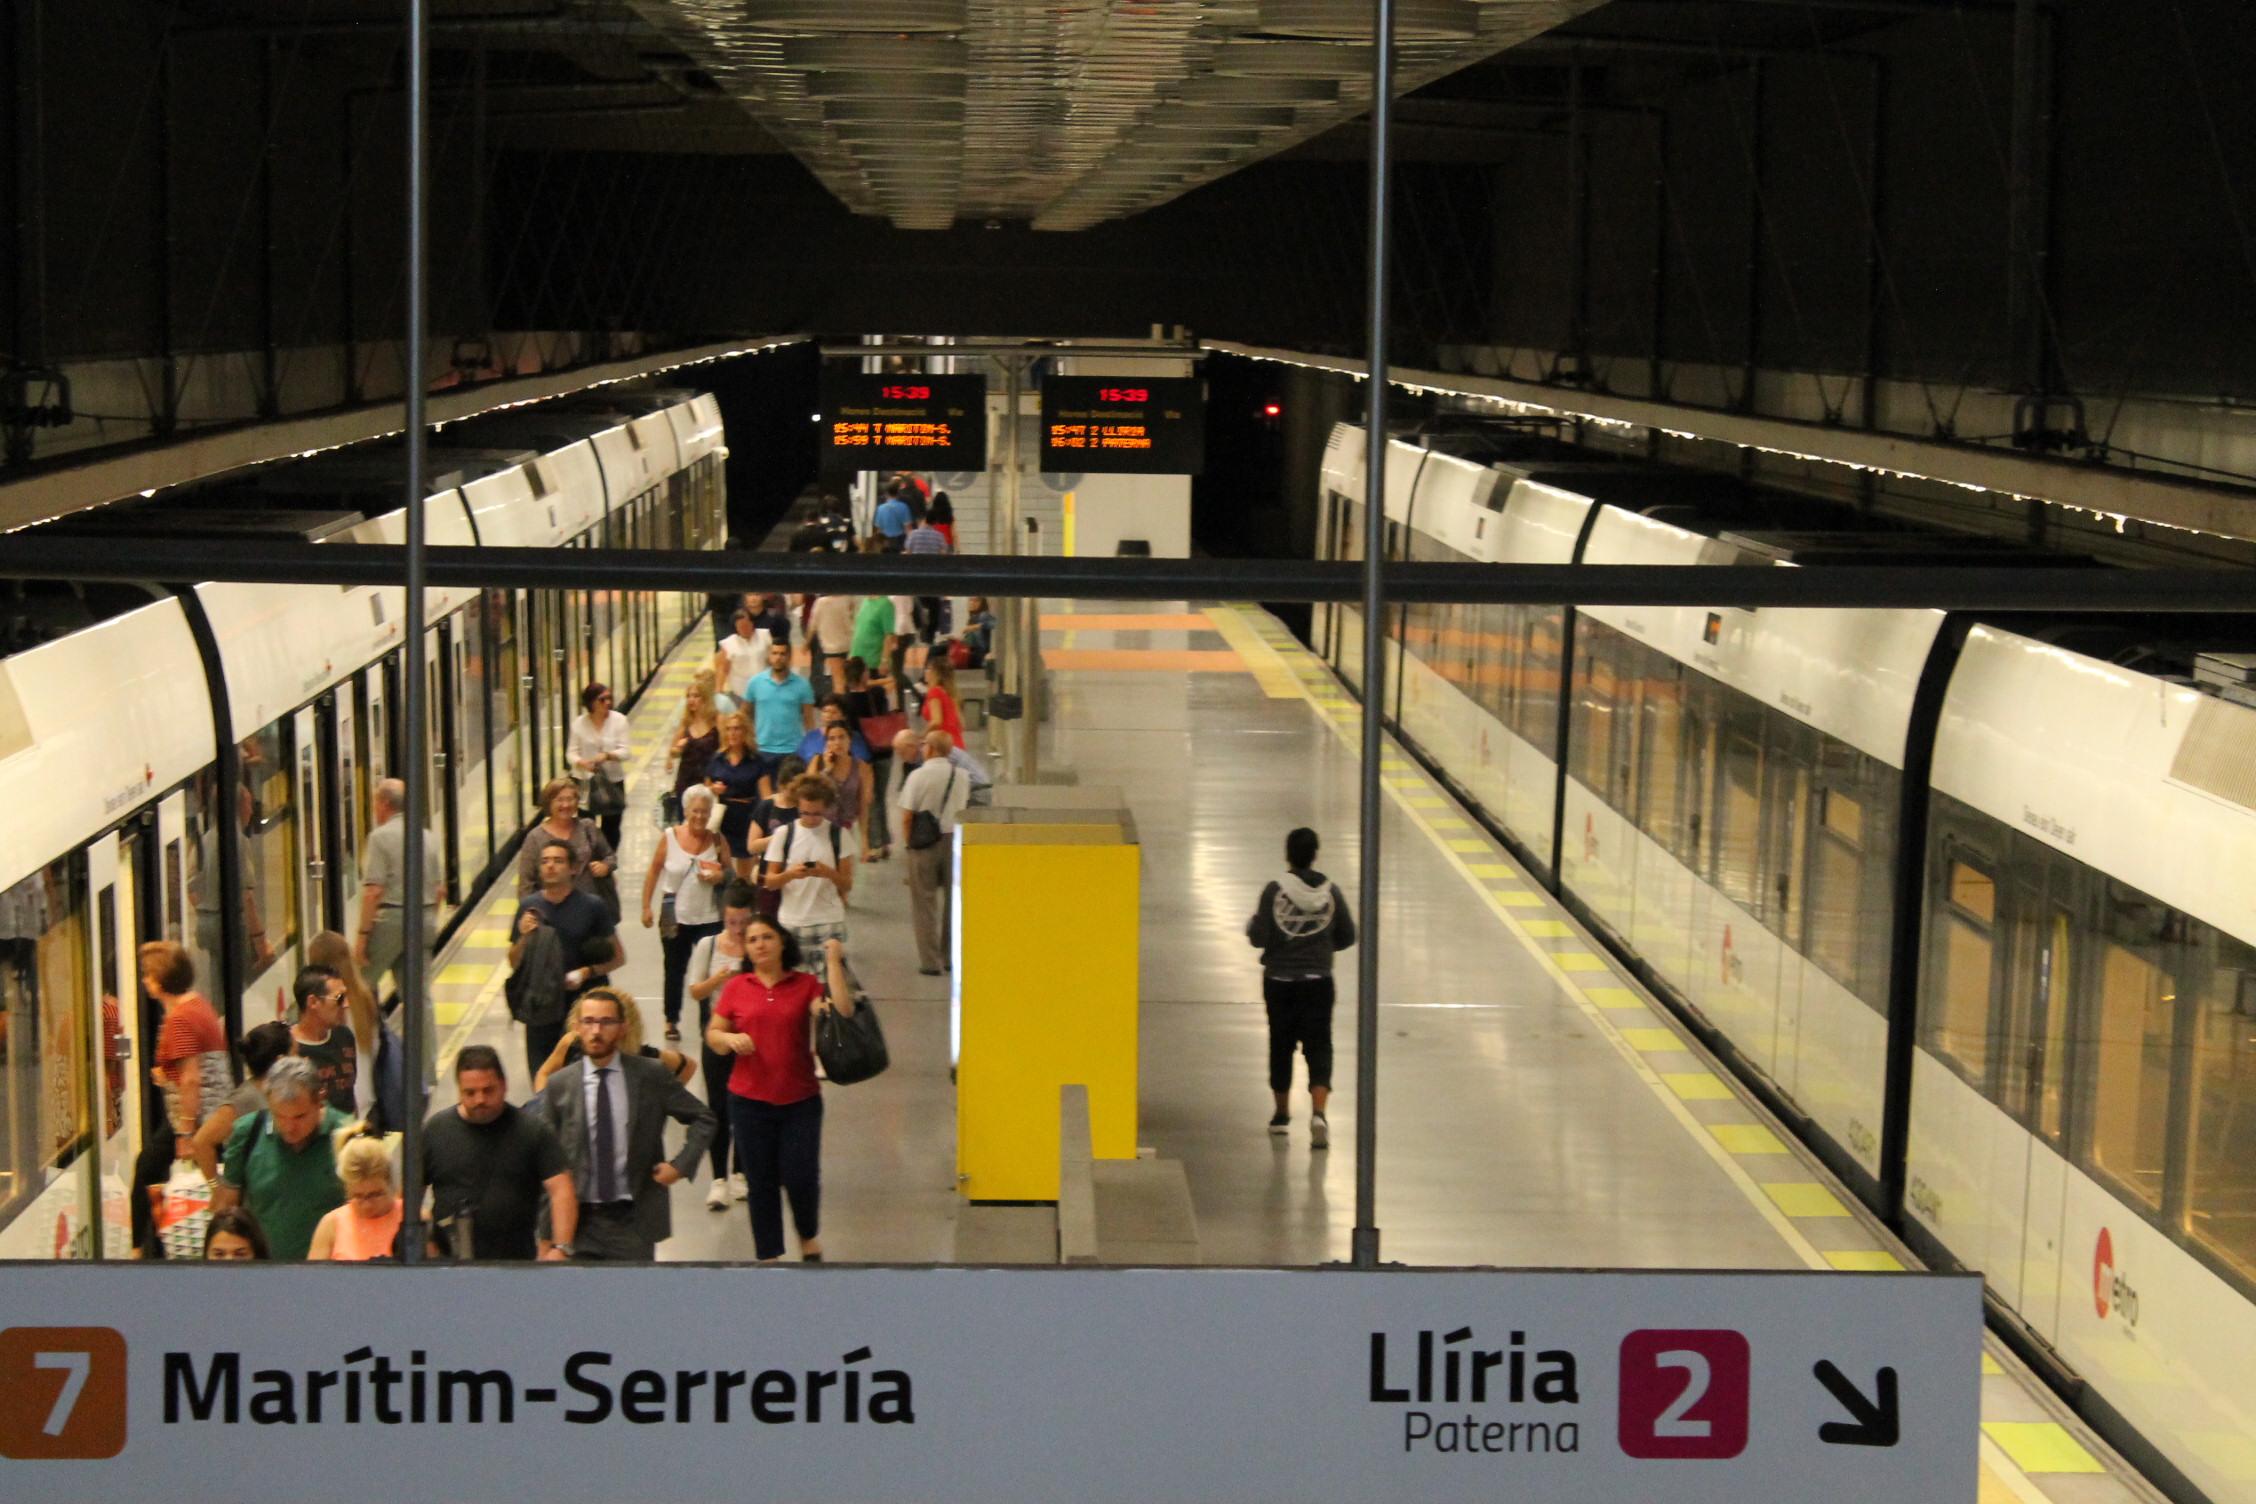 Line 7 Metrovalencia (Tossal del Rei - Marítima Serrería): Schedules, stops and map